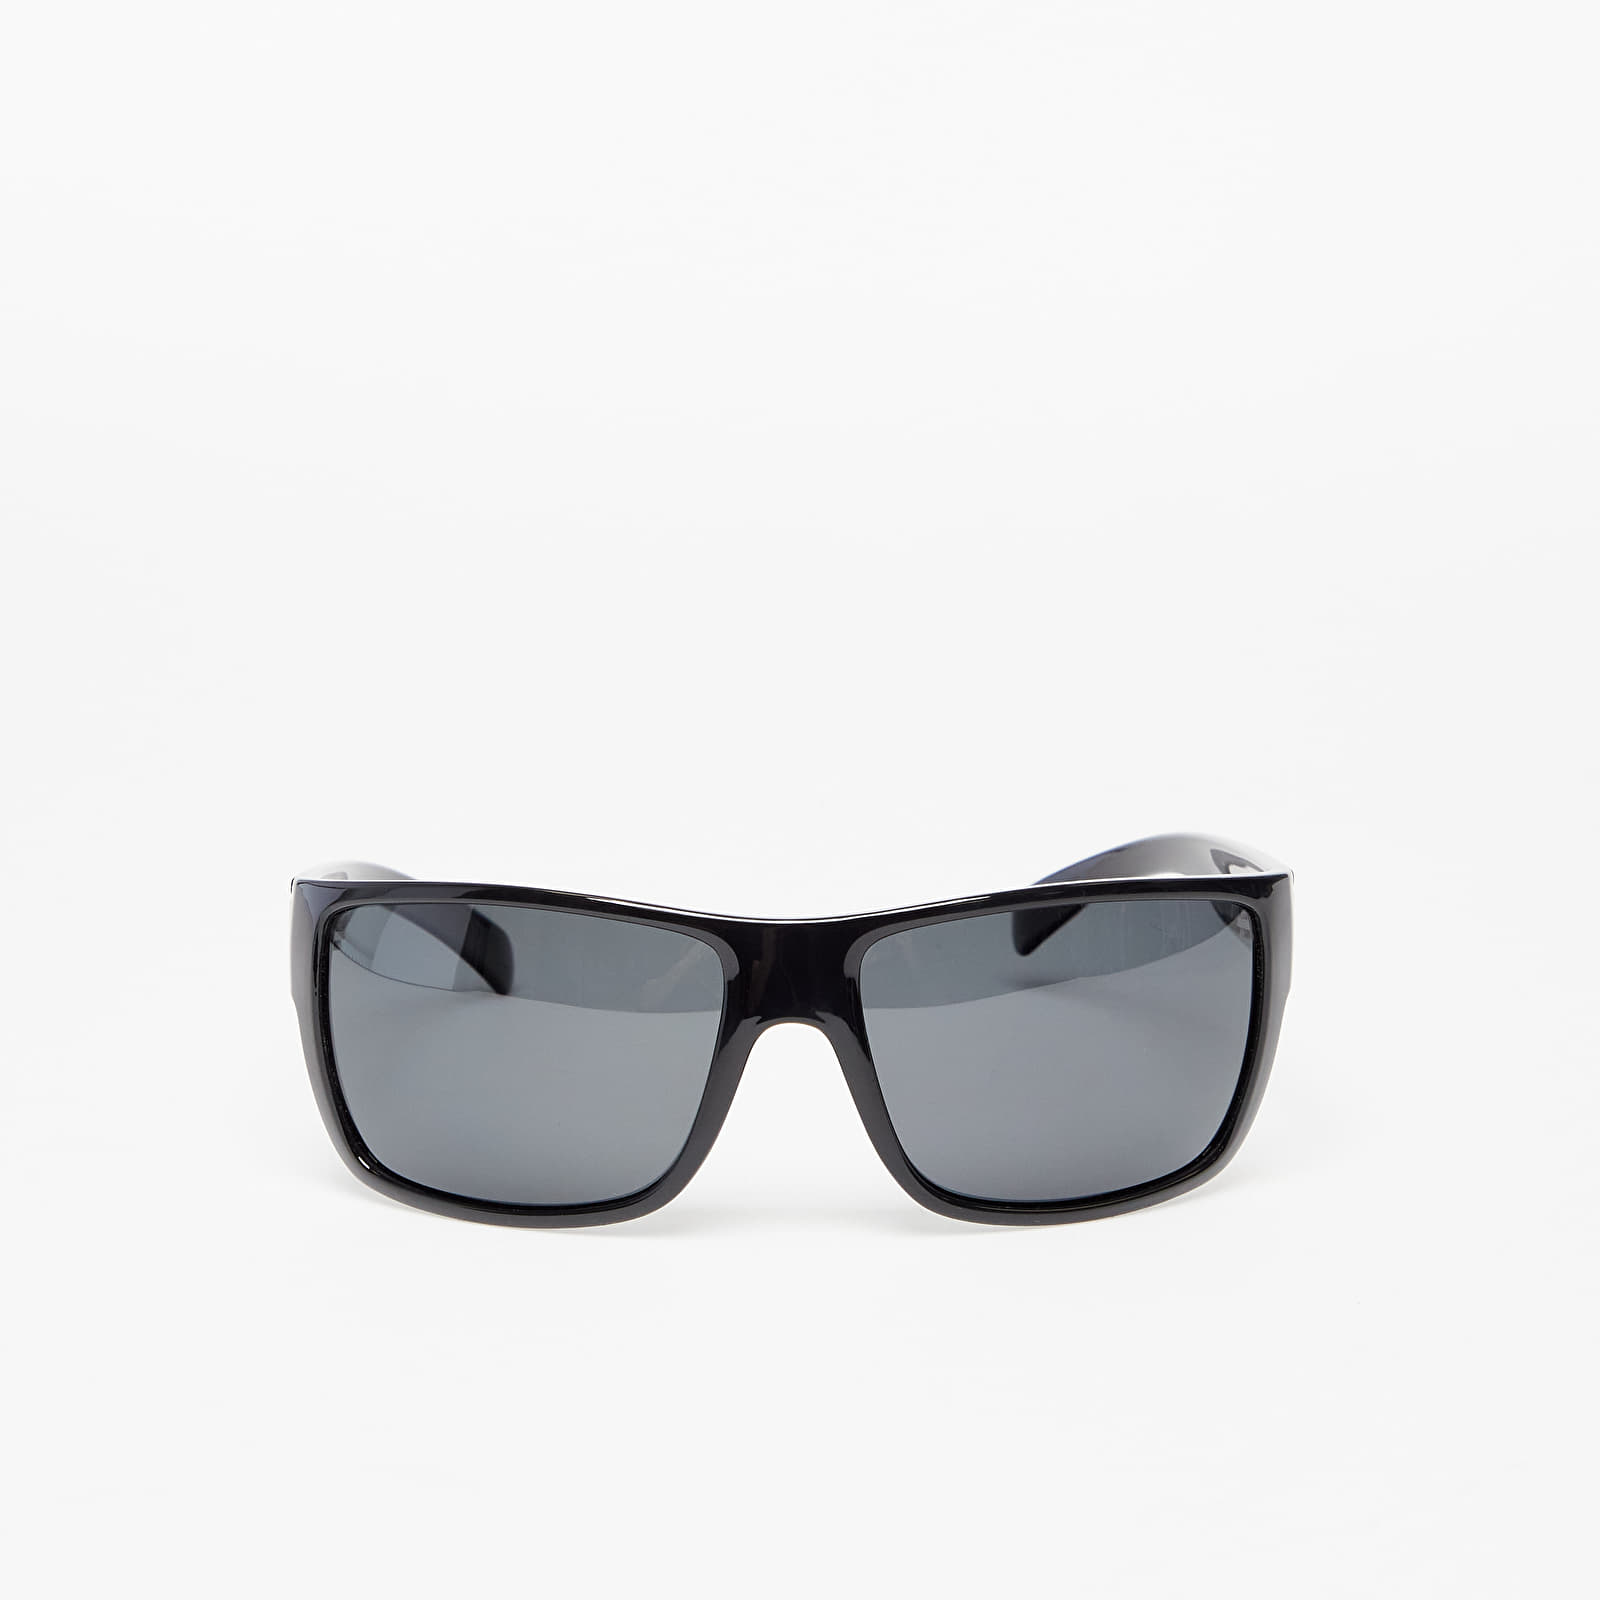 Sunglasses Horsefeathers Zenith Sunglasses Gloss Black/Gray